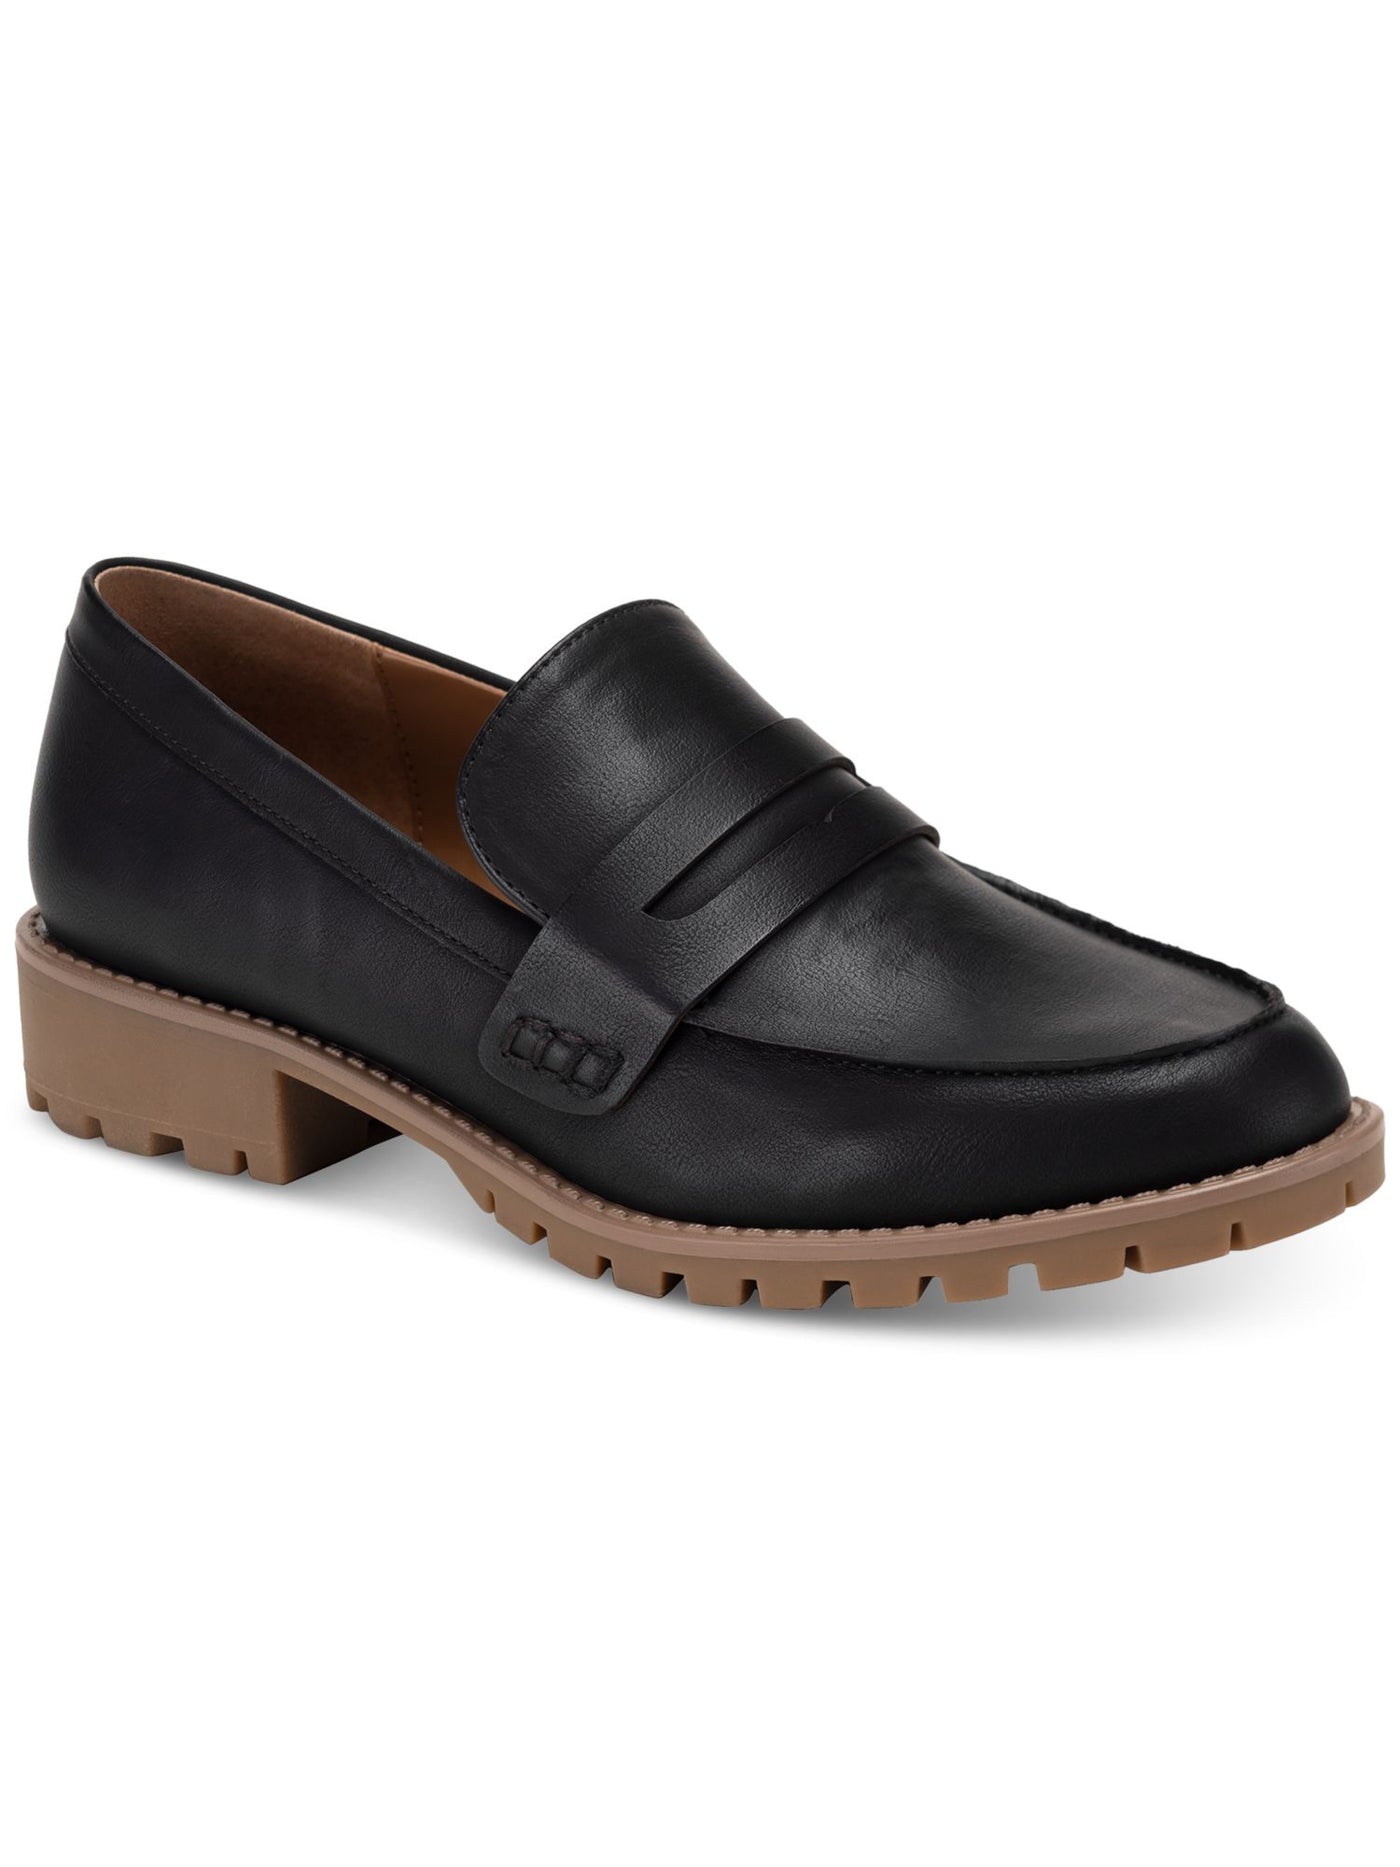 STYLE & COMPANY Womens Black Penny Keeper Lug Sole Padded Olivviaa Round Toe Block Heel Slip On Loafers Shoes 8.5 M